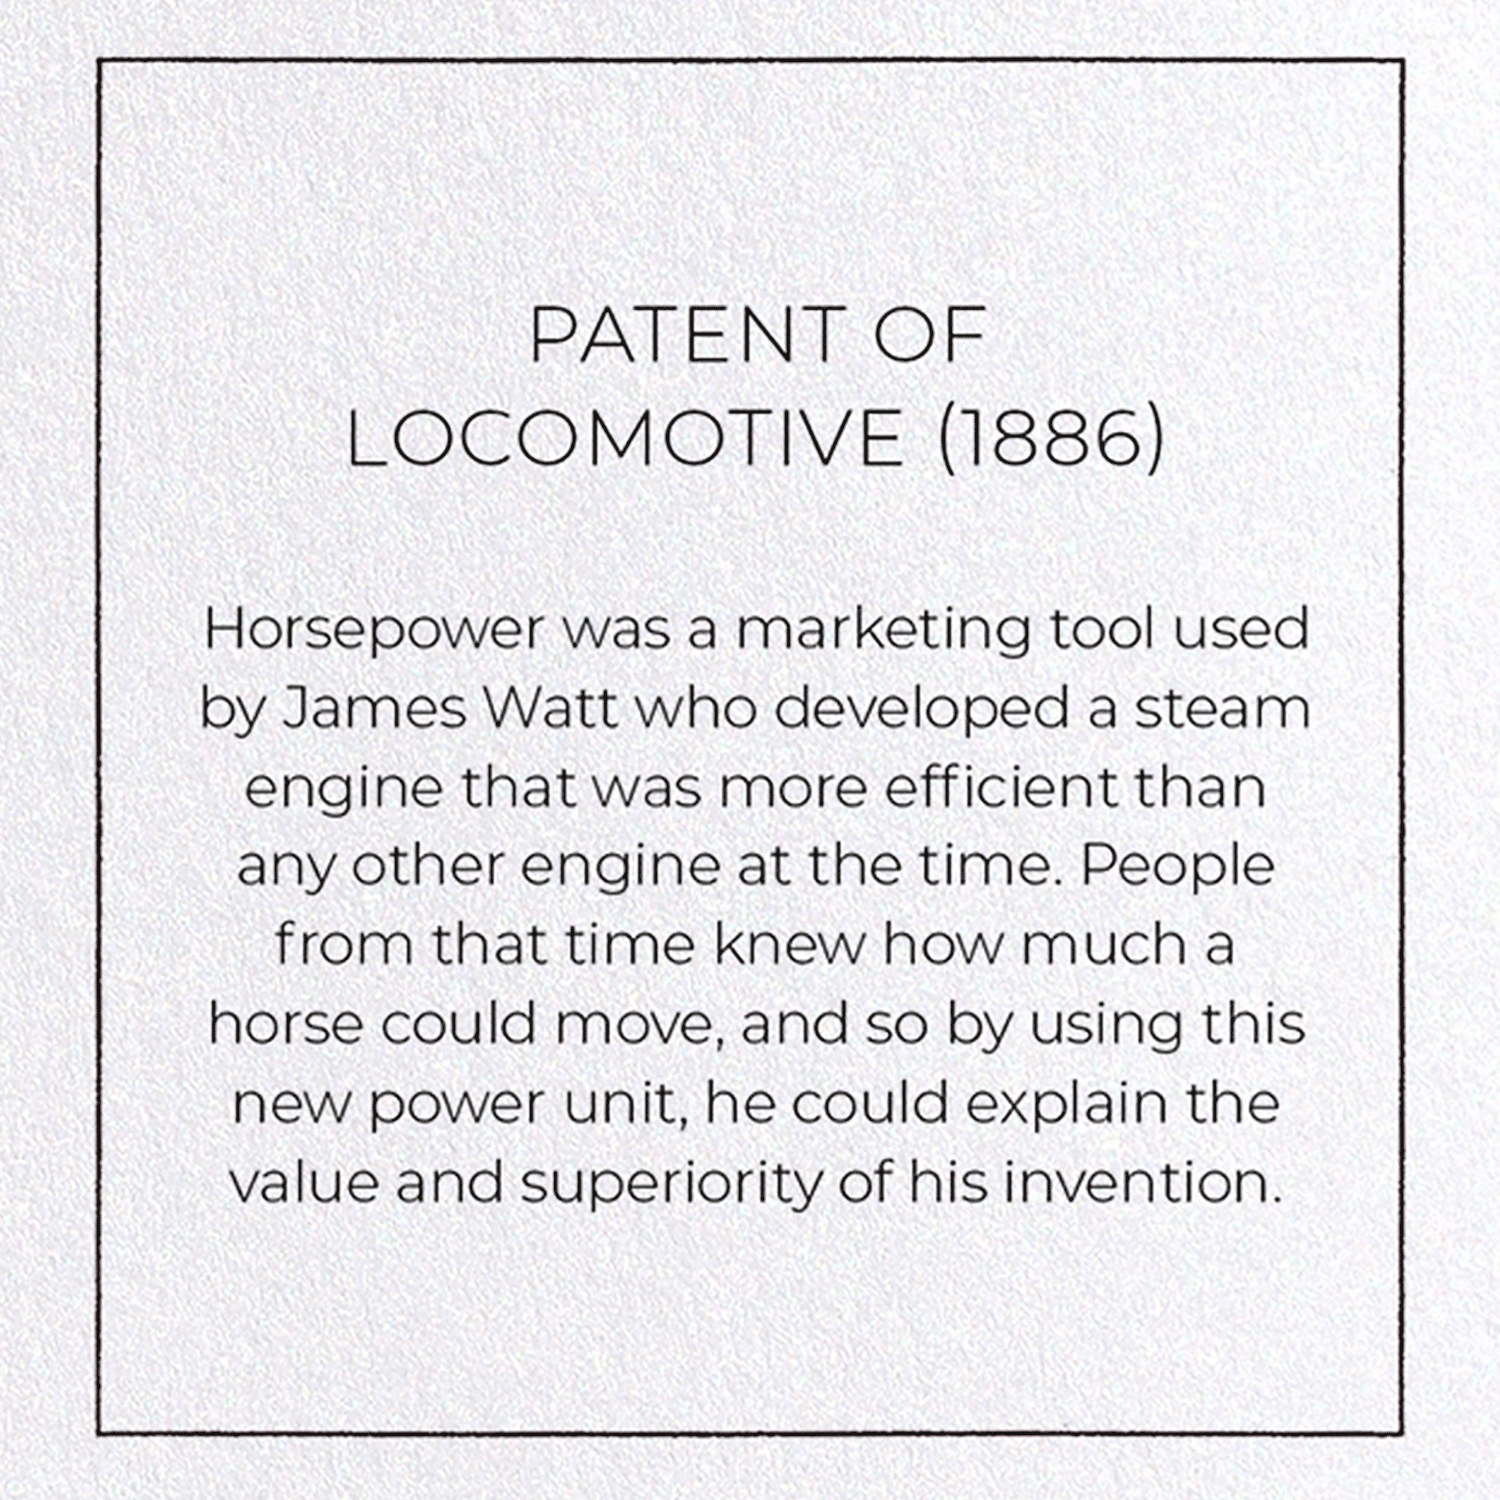 PATENT OF LOCOMOTIVE (1886)